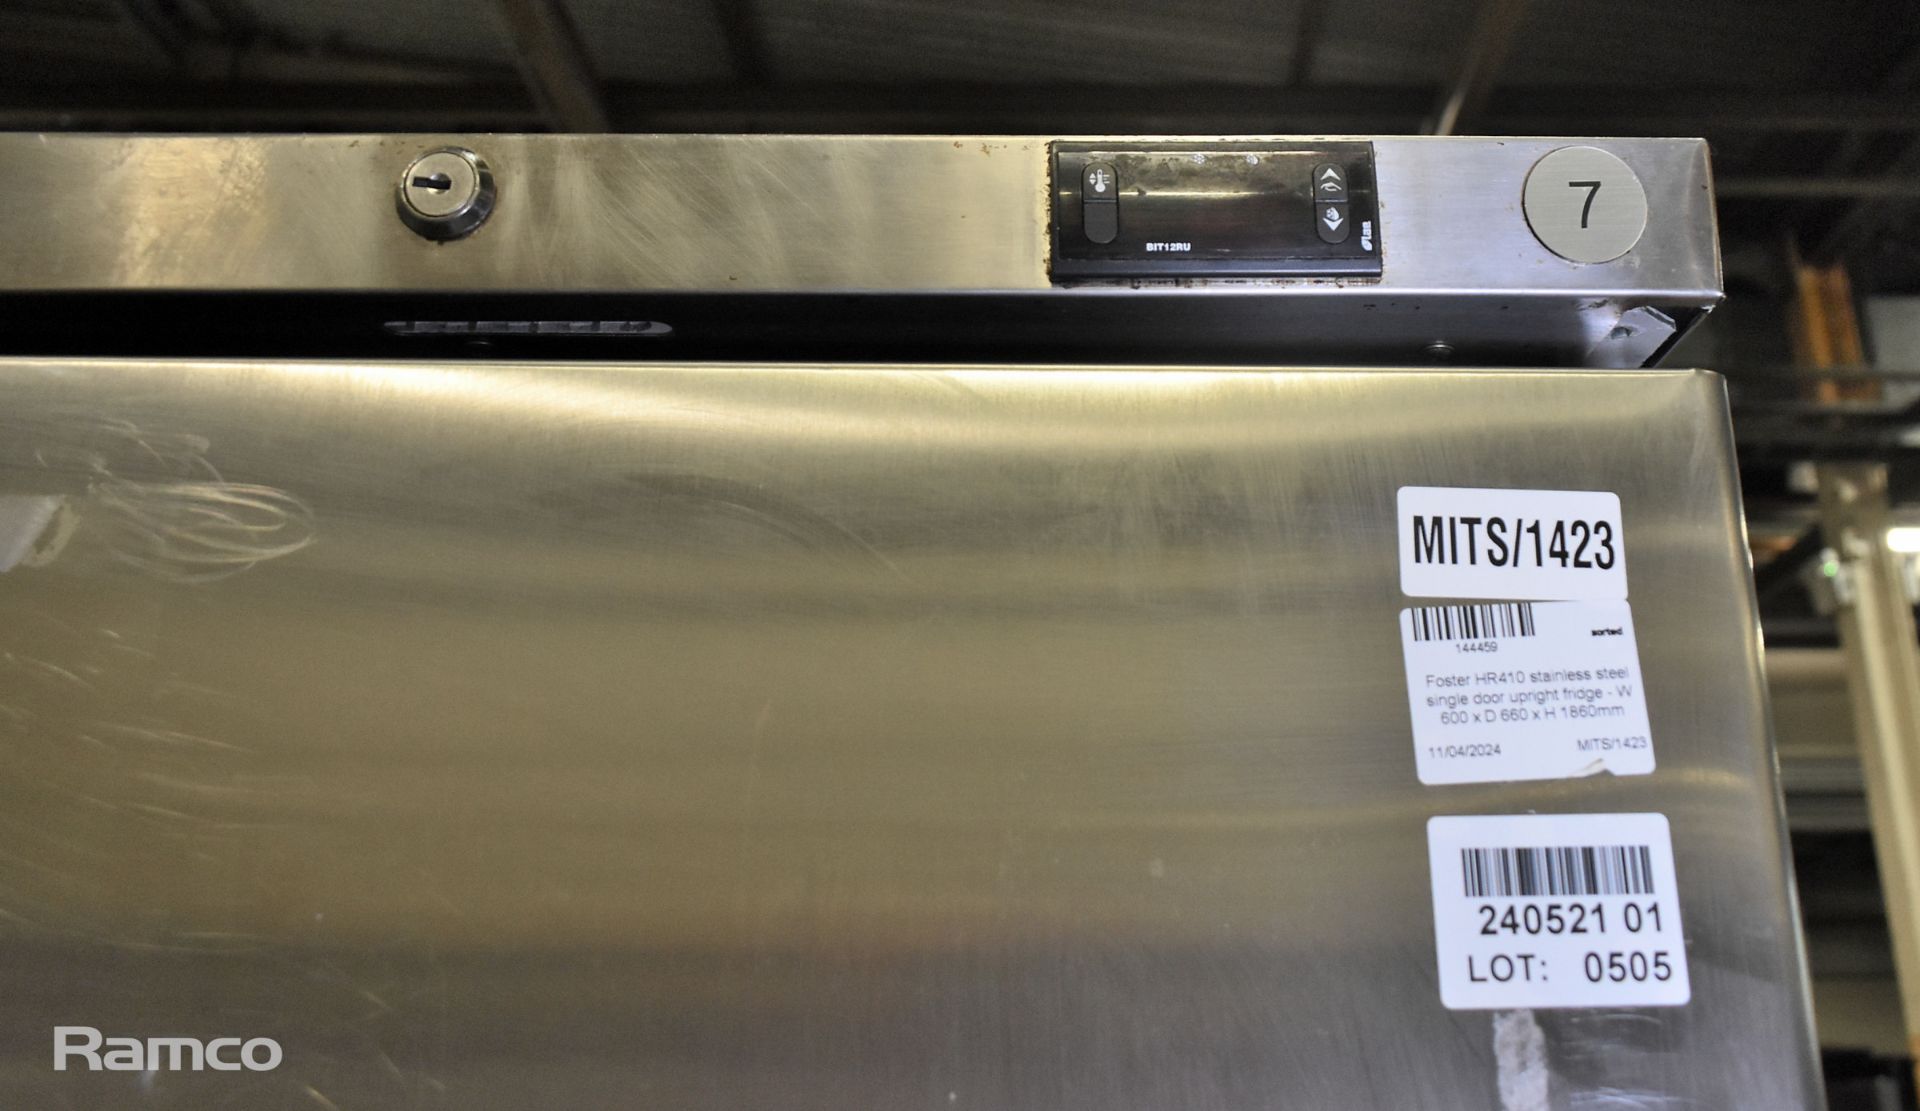 Foster HR410 stainless steel single door upright fridge - W 600 x D 660 x H 1860mm - Image 5 of 6